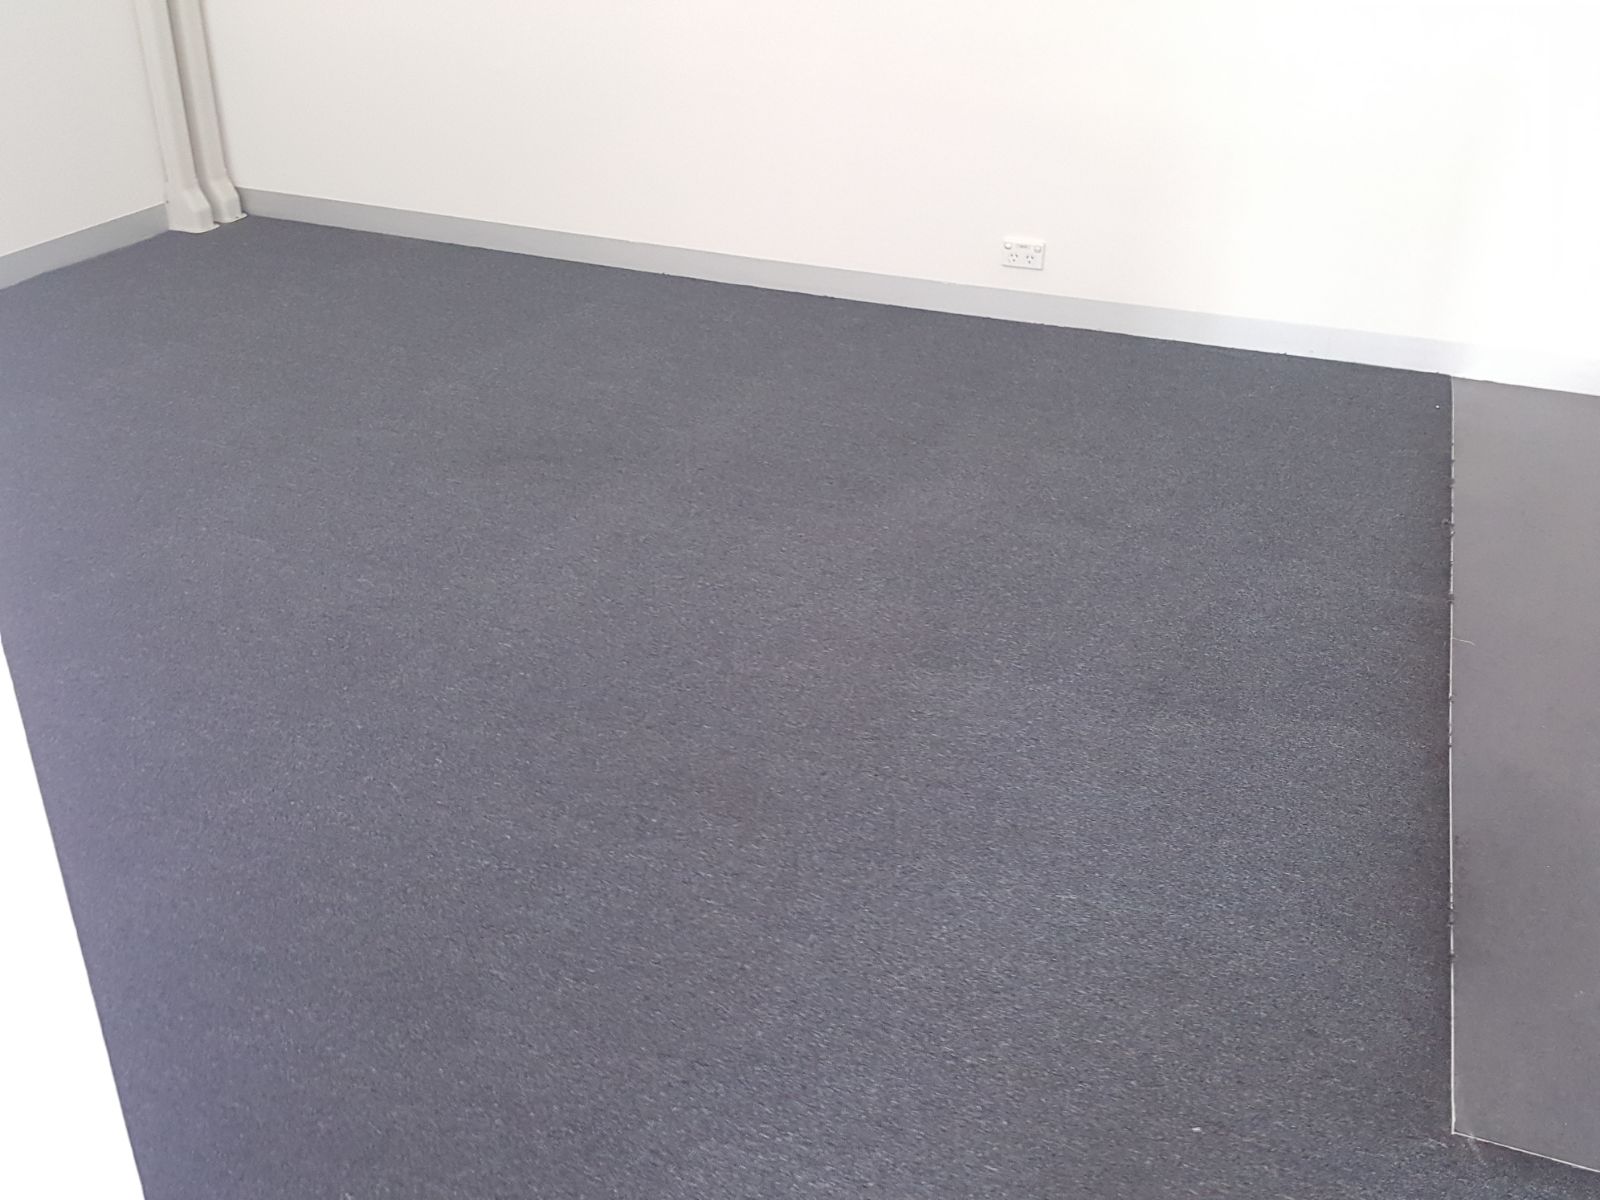 Clean Carpet After